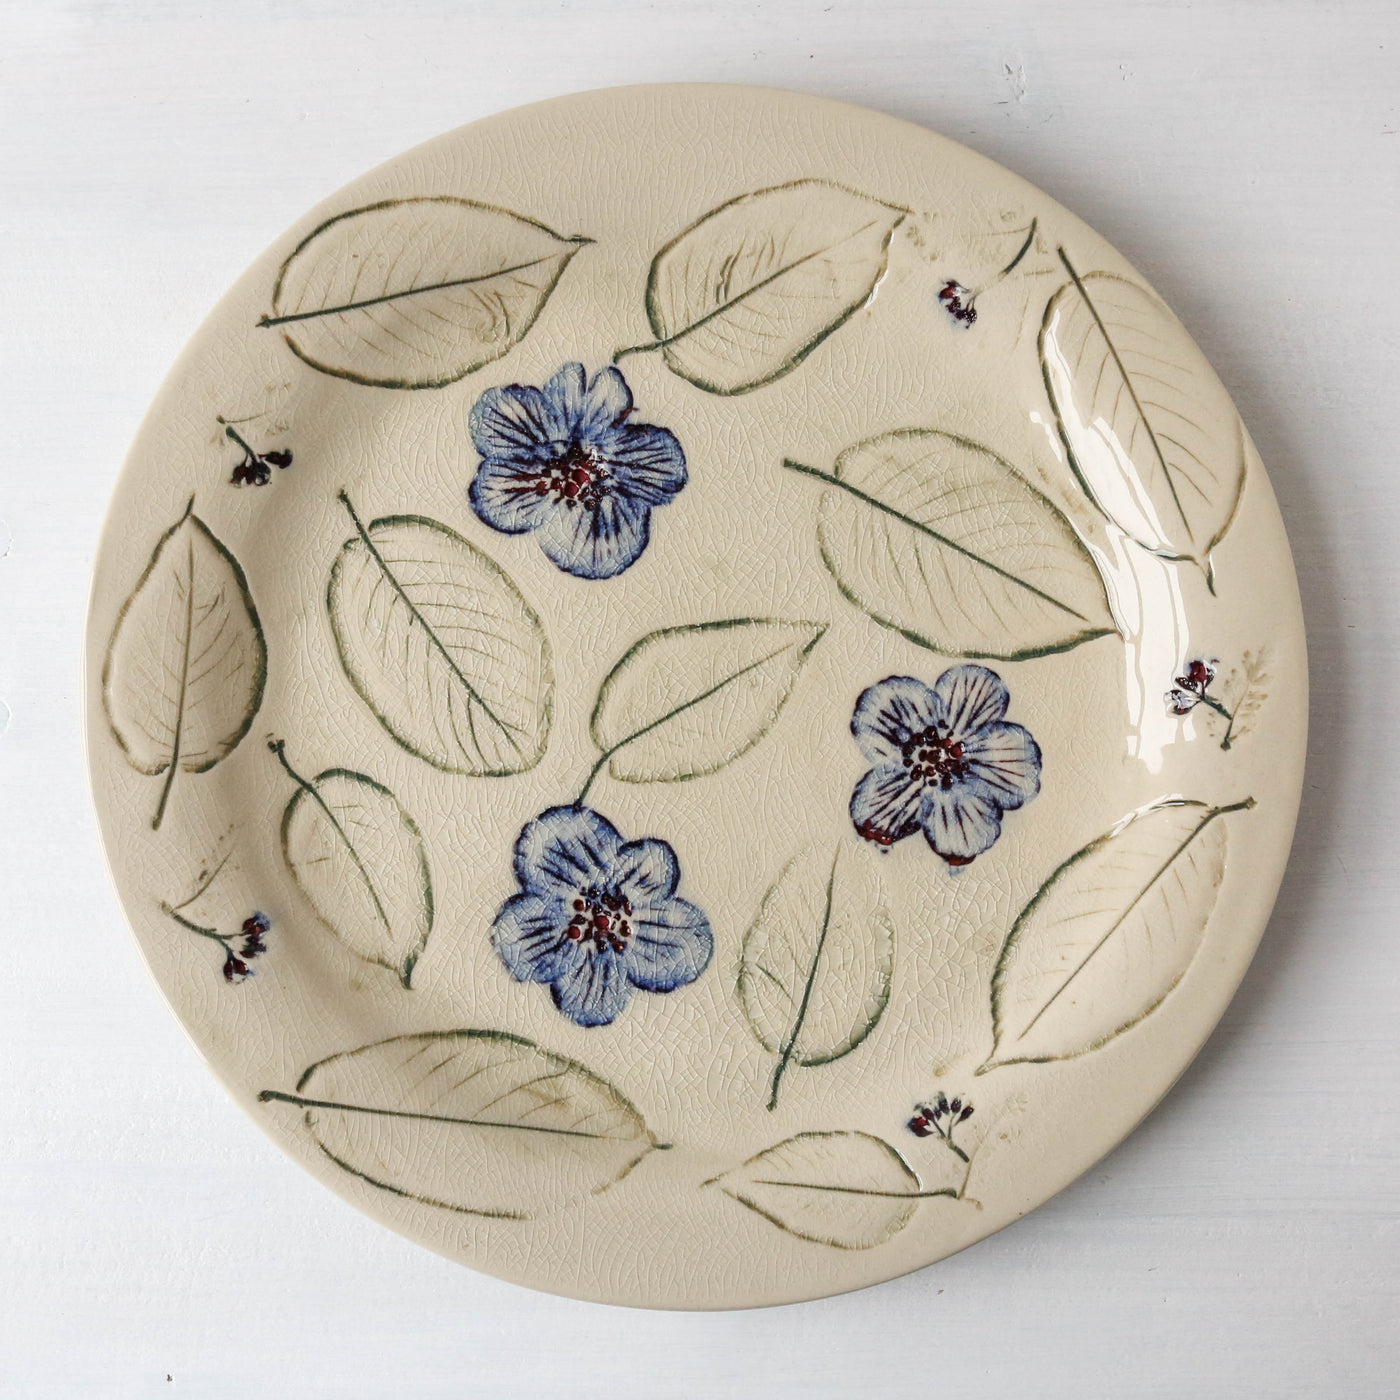 Marlem Decorative Stoneware Platter